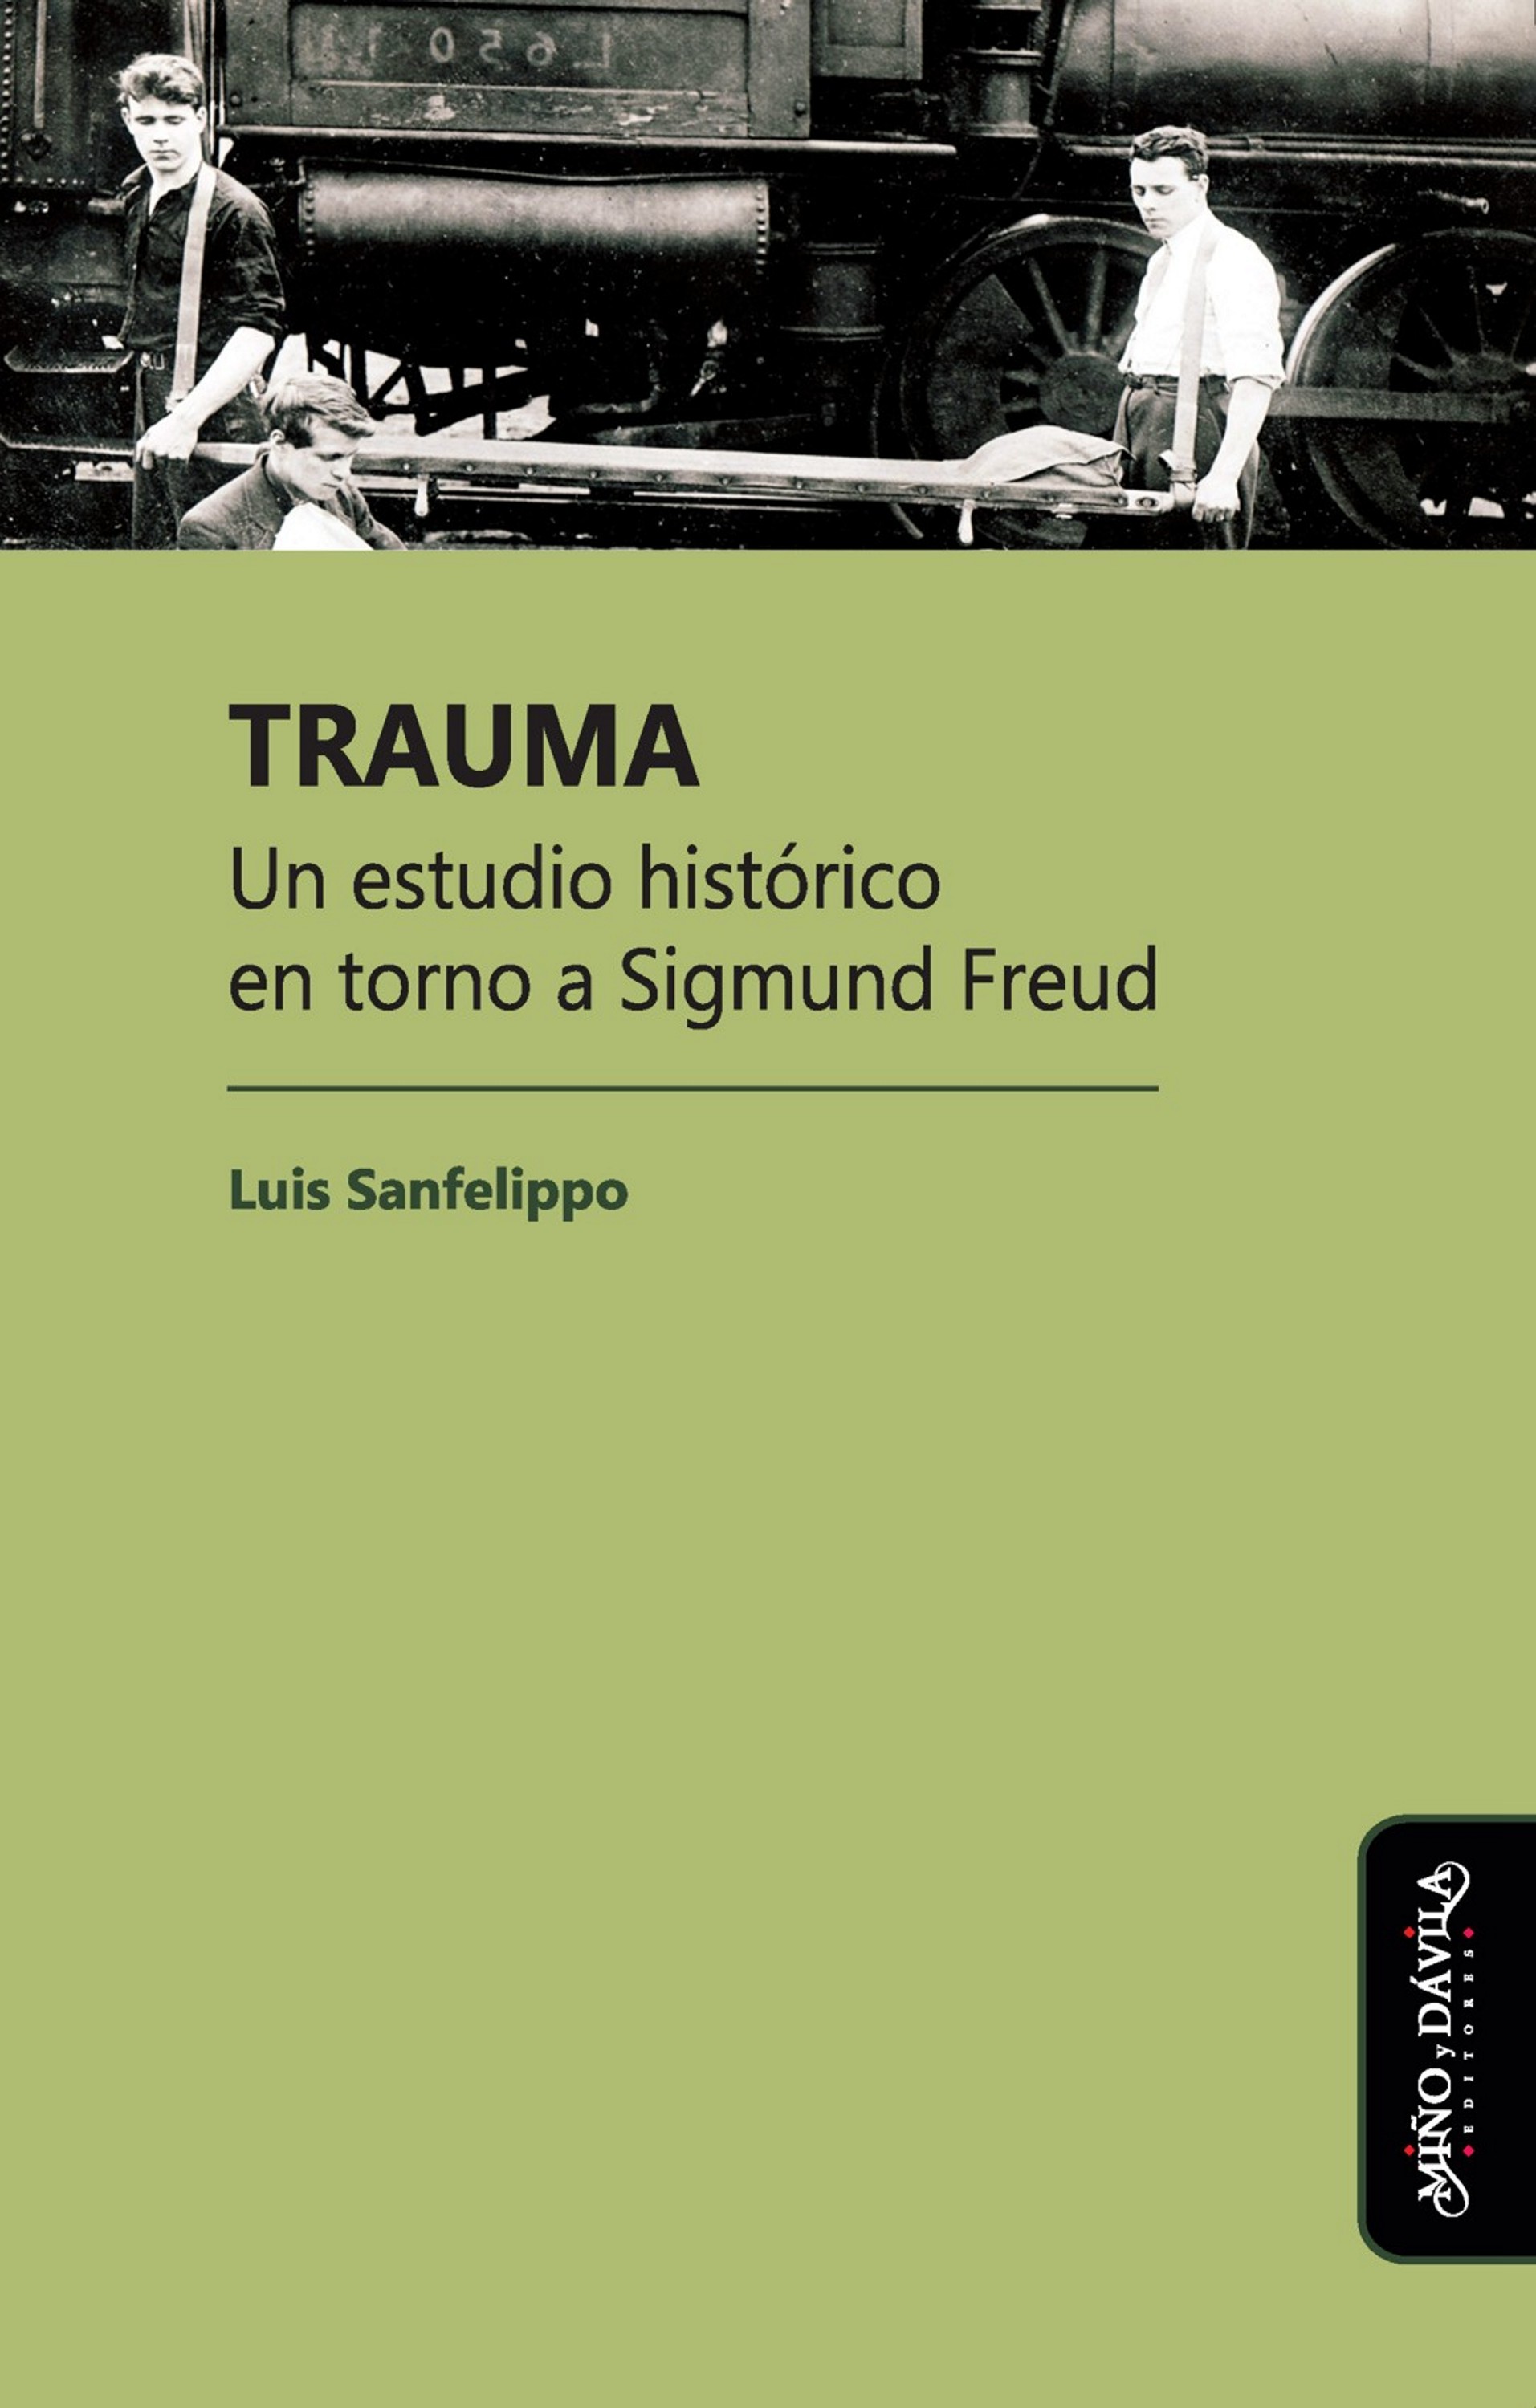 Luis Sanfelippo Trauma